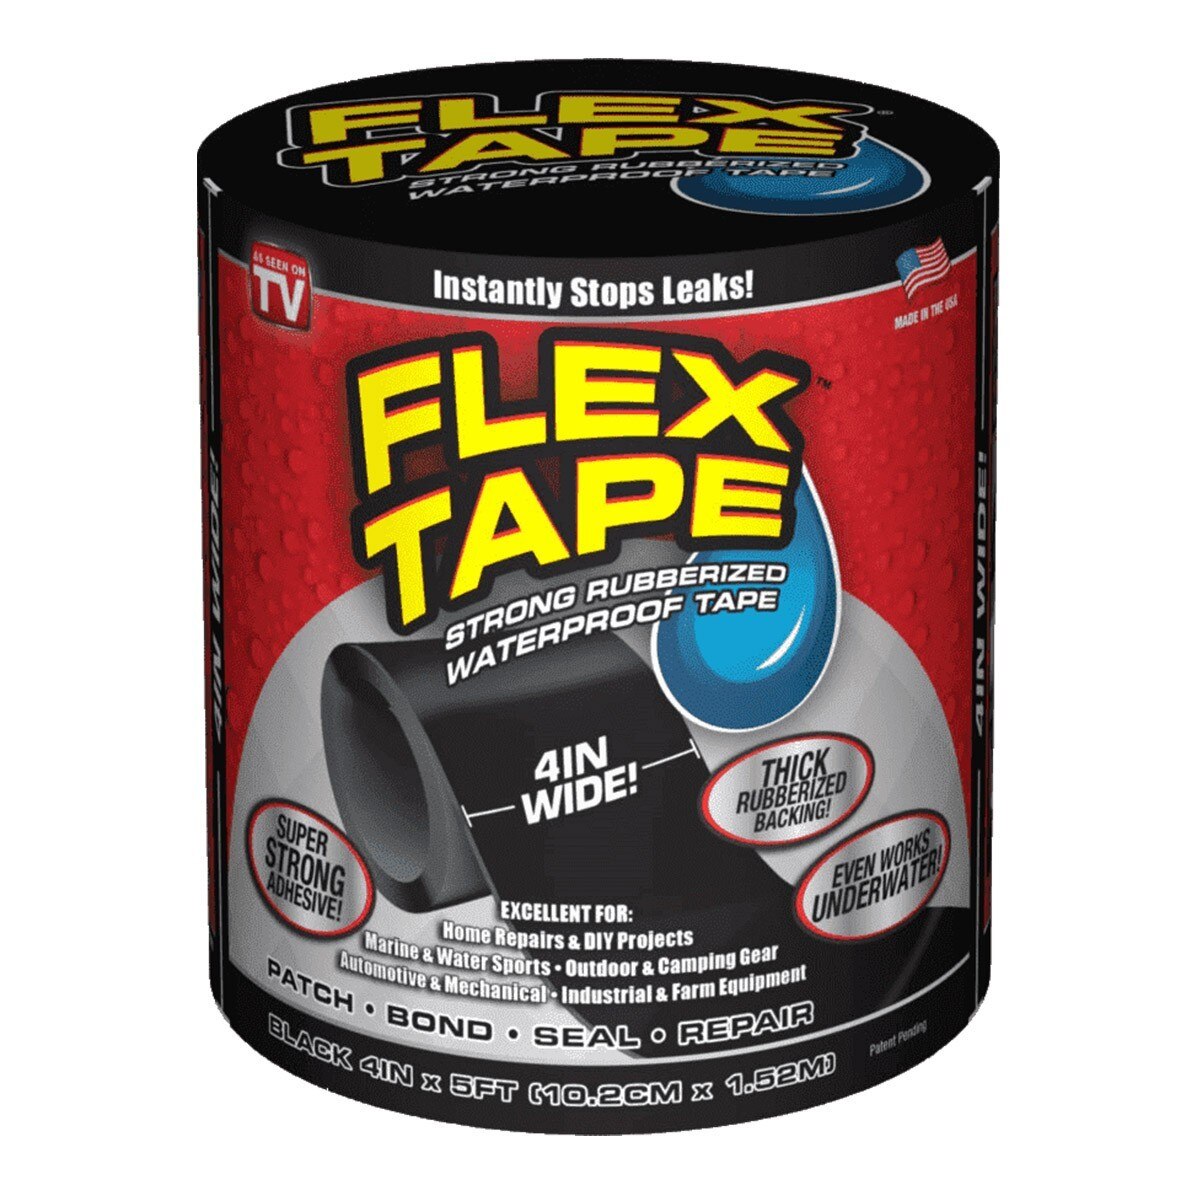 FLEX TAPE 強固修補膠帶 2入